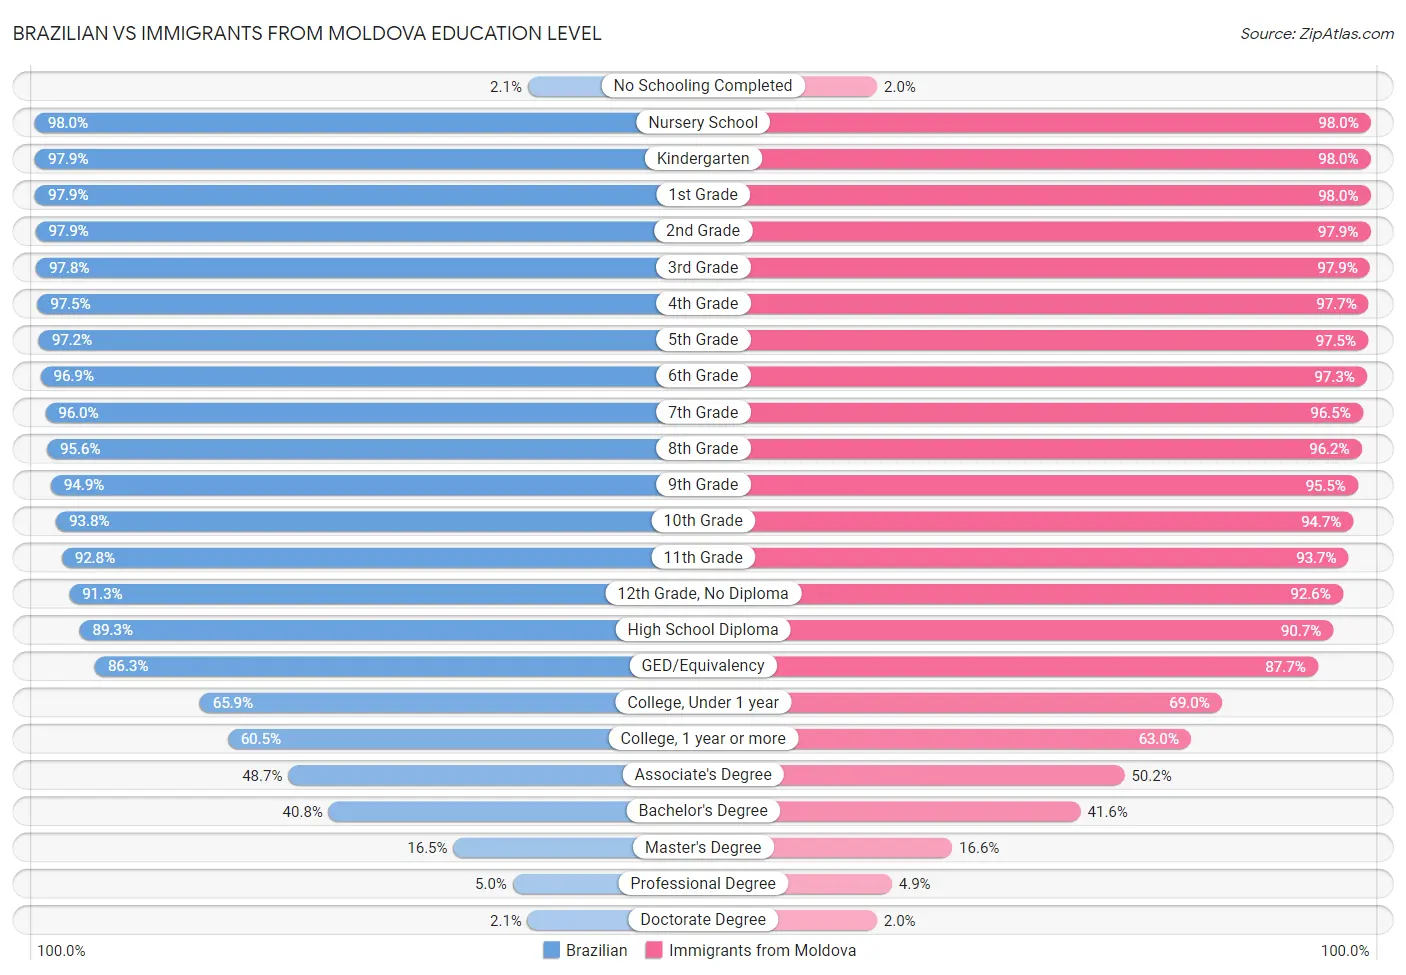 Brazilian vs Immigrants from Moldova Education Level